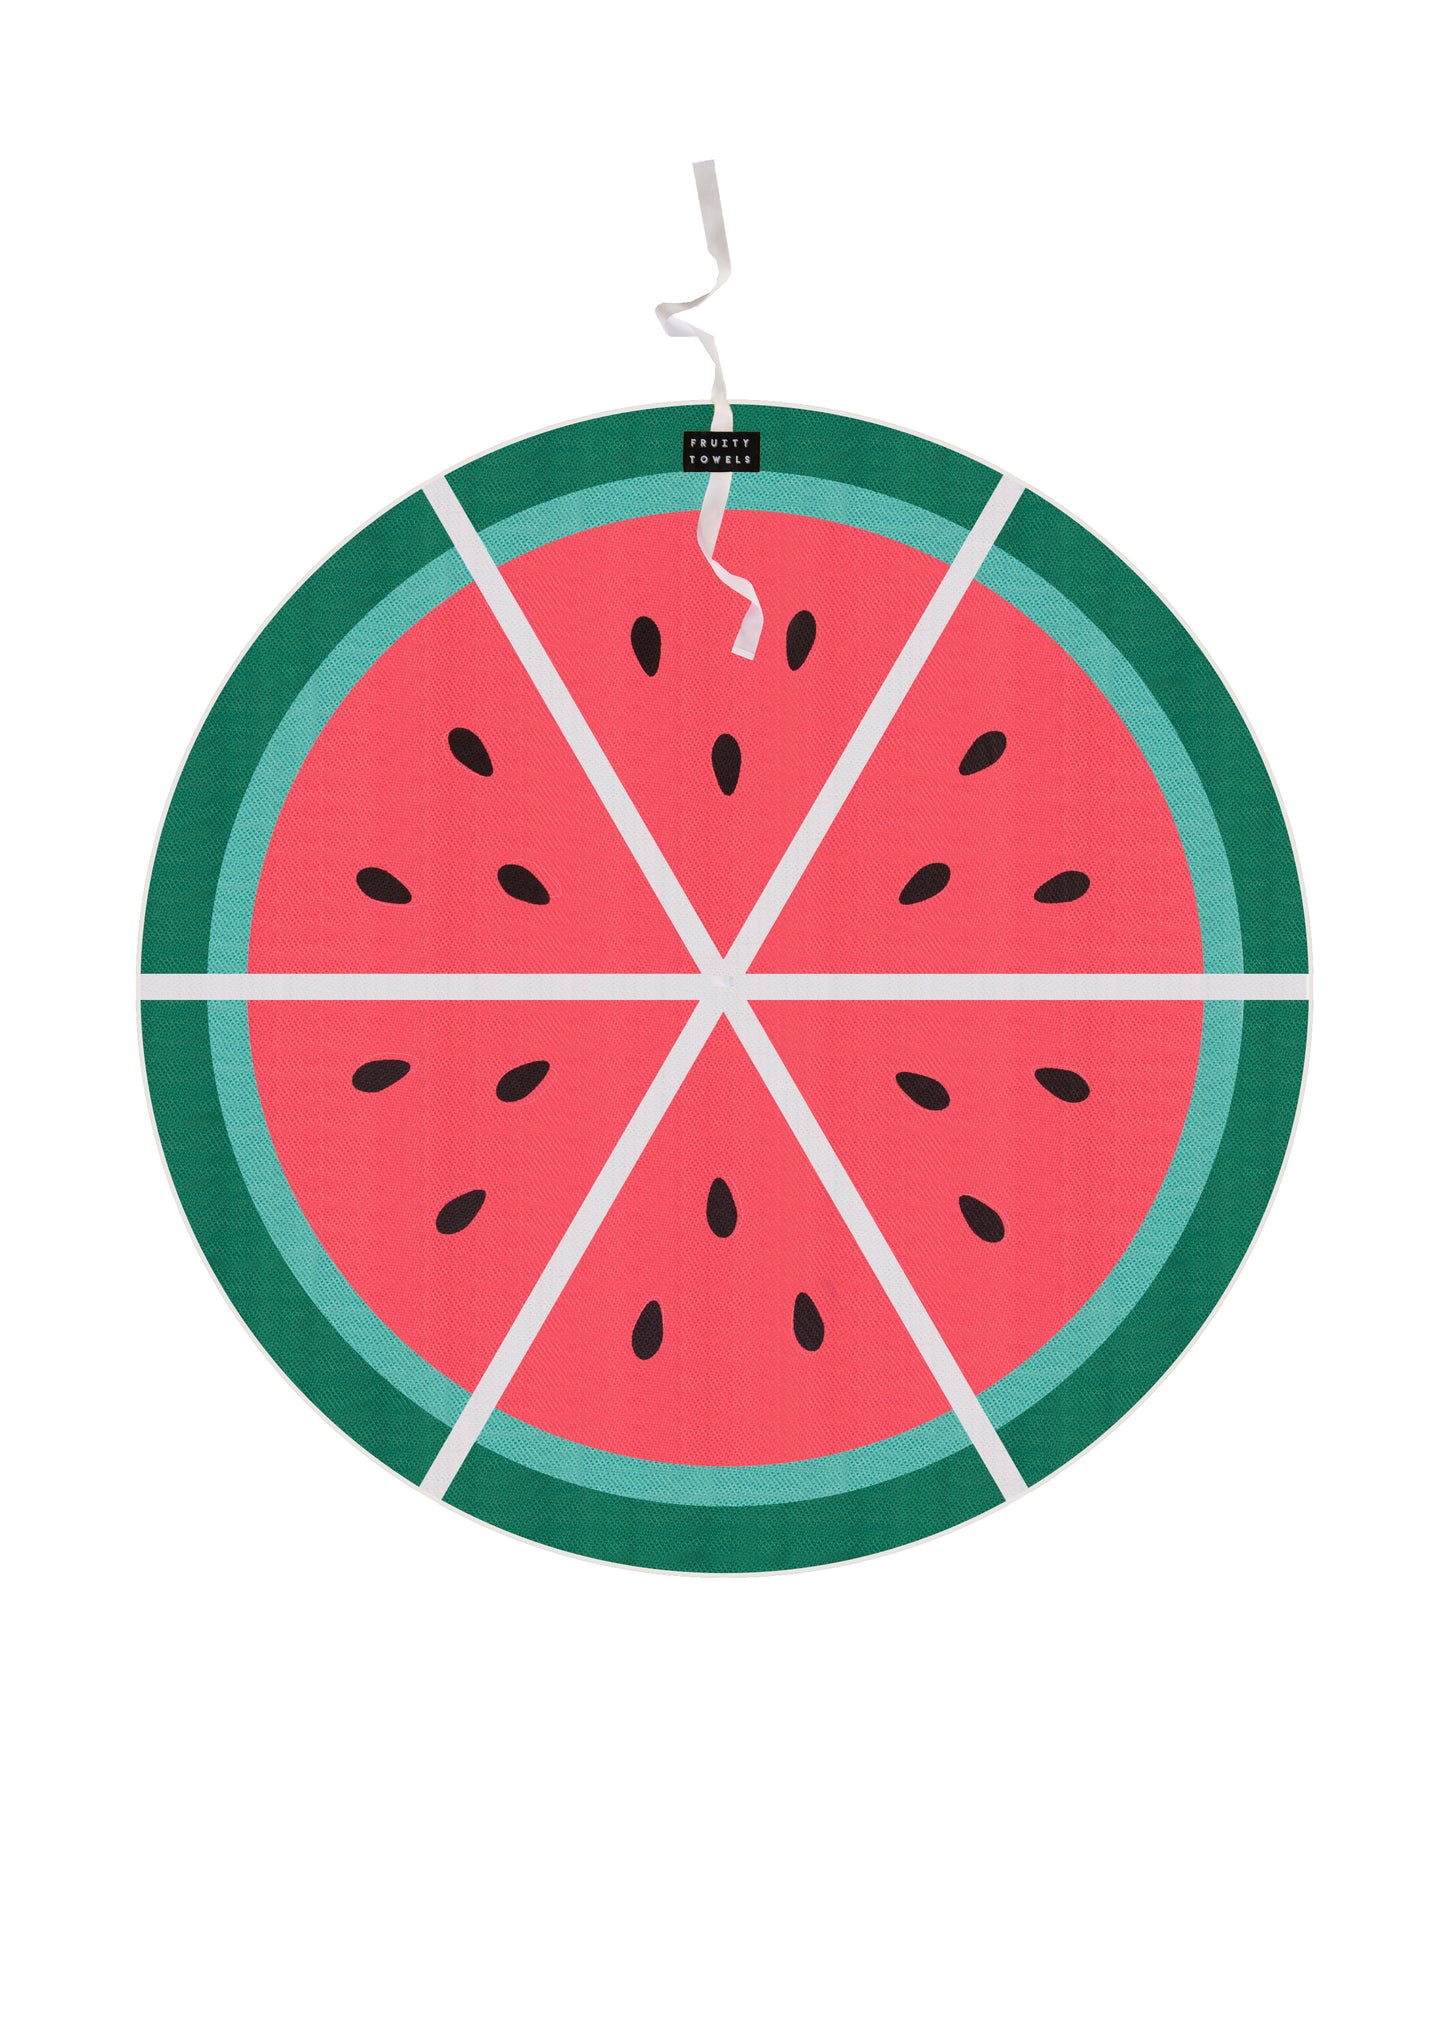 The Watermelon